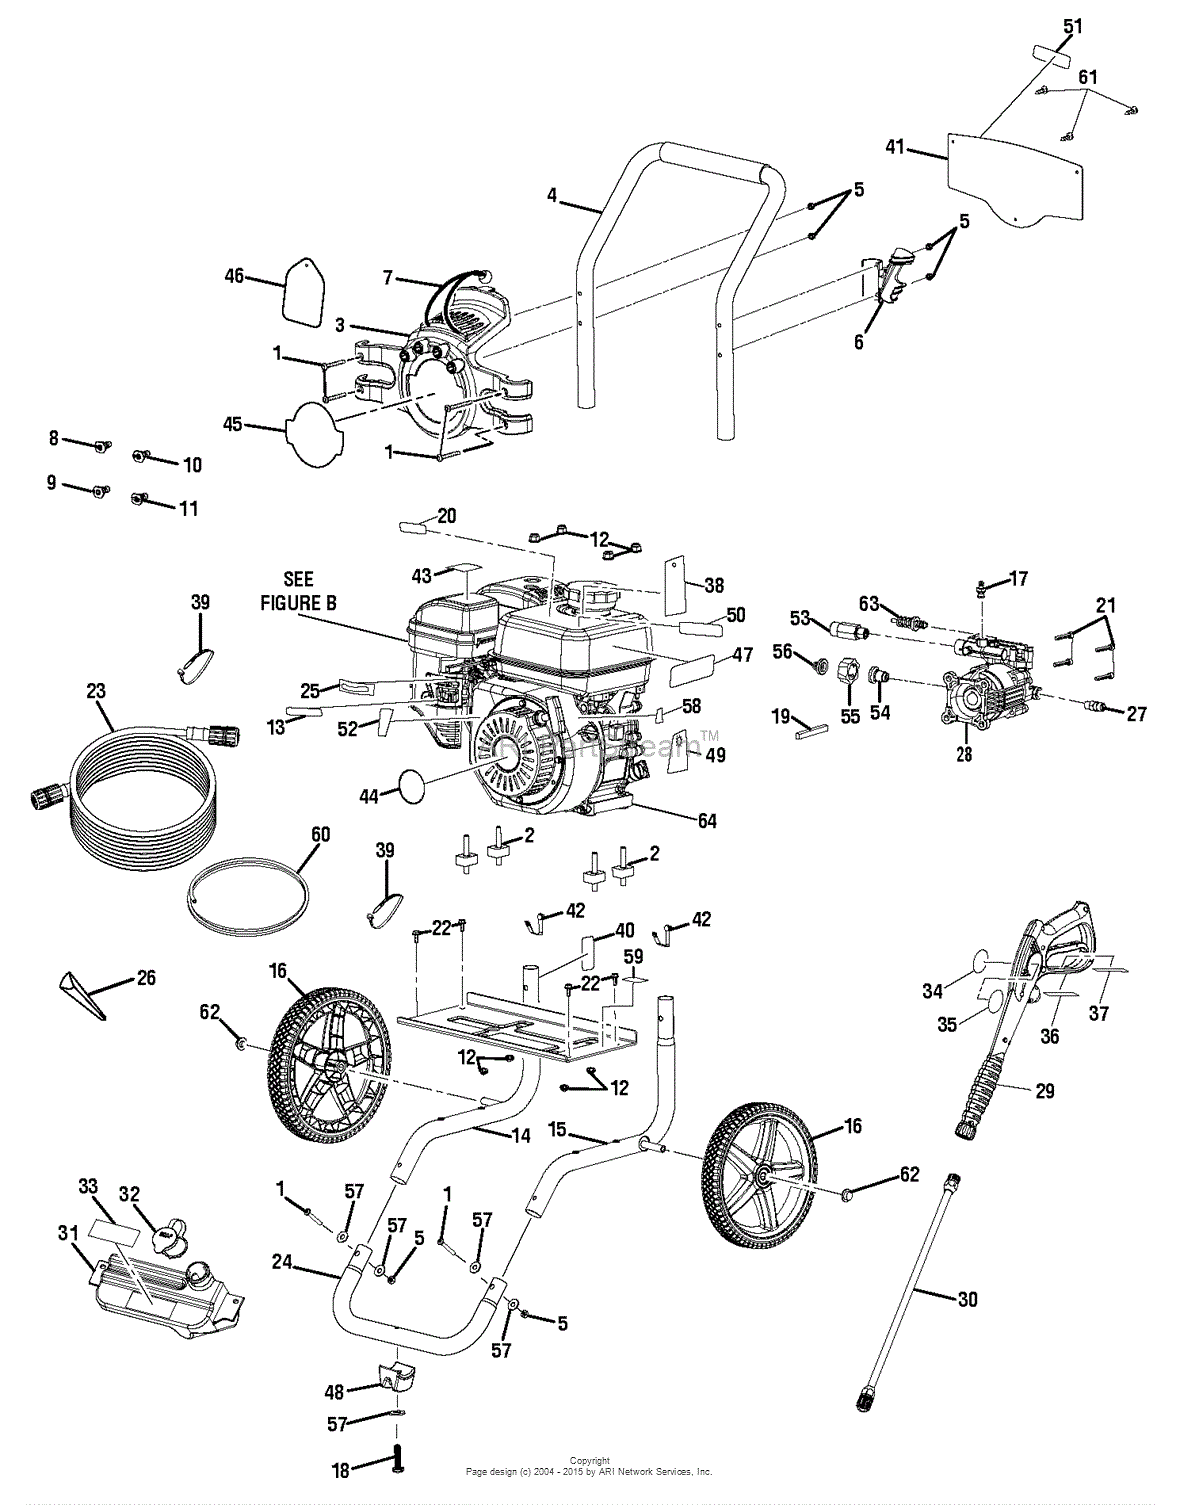 [DIAGRAM] 6 4 Powerstroke Engine Diagram 2005 6.0 Powerstroke Dies While Driving